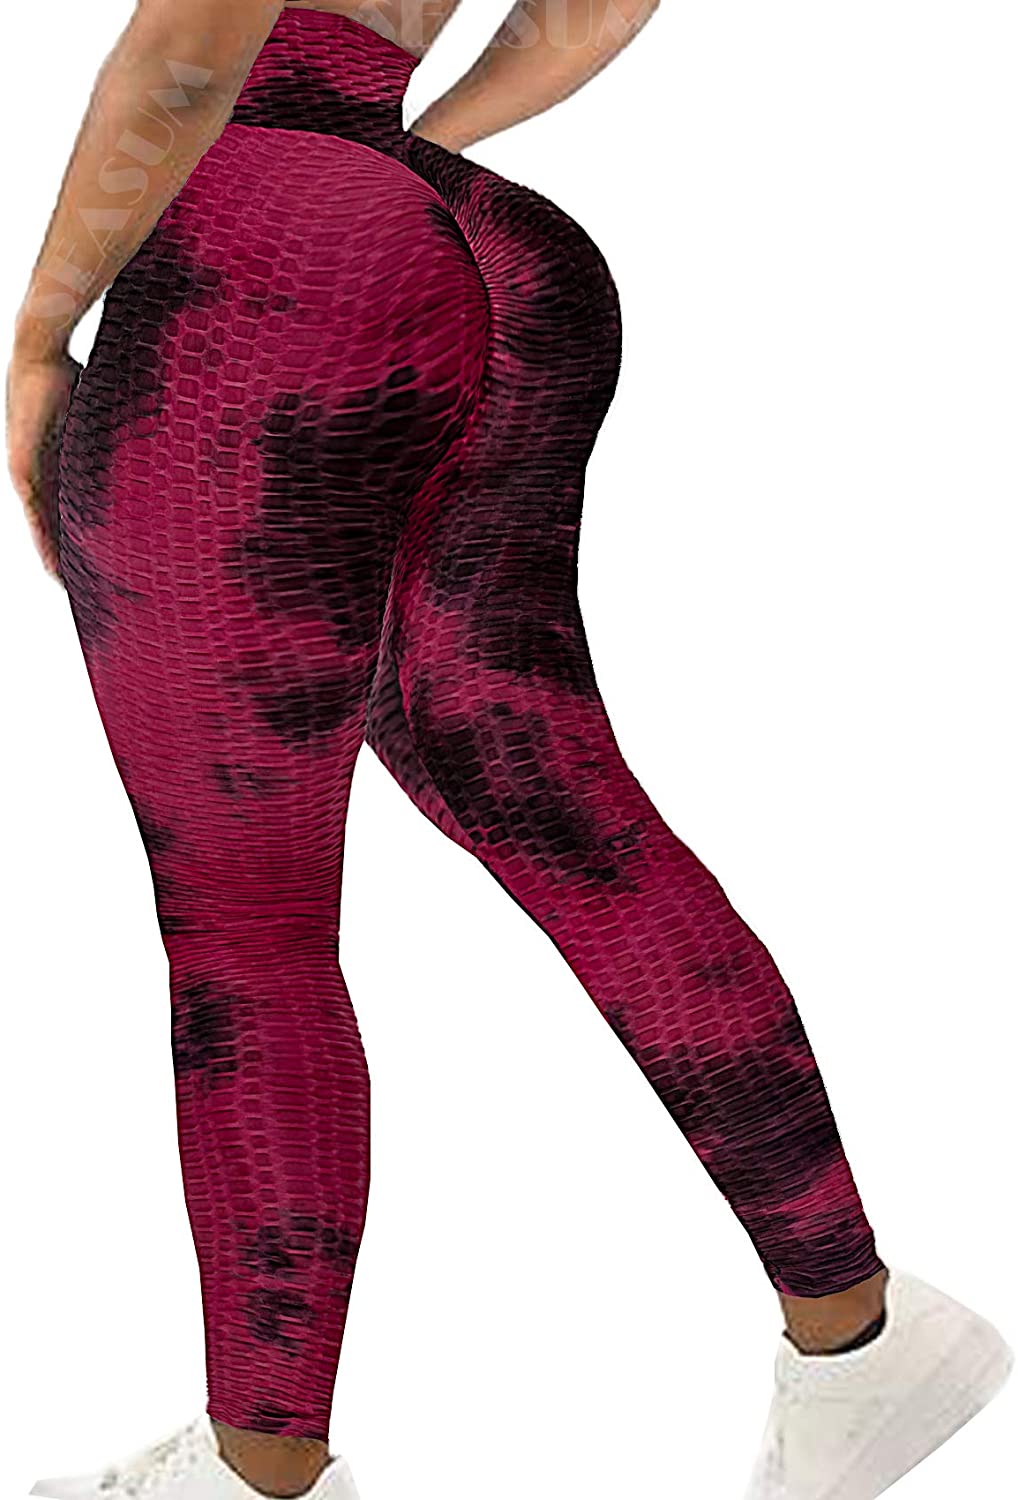  Scrunch Booty Workout Leggings Womens Tie Dye Butt Lifting  Yoga Pants High Waisted Textured Tummy Control Legging M